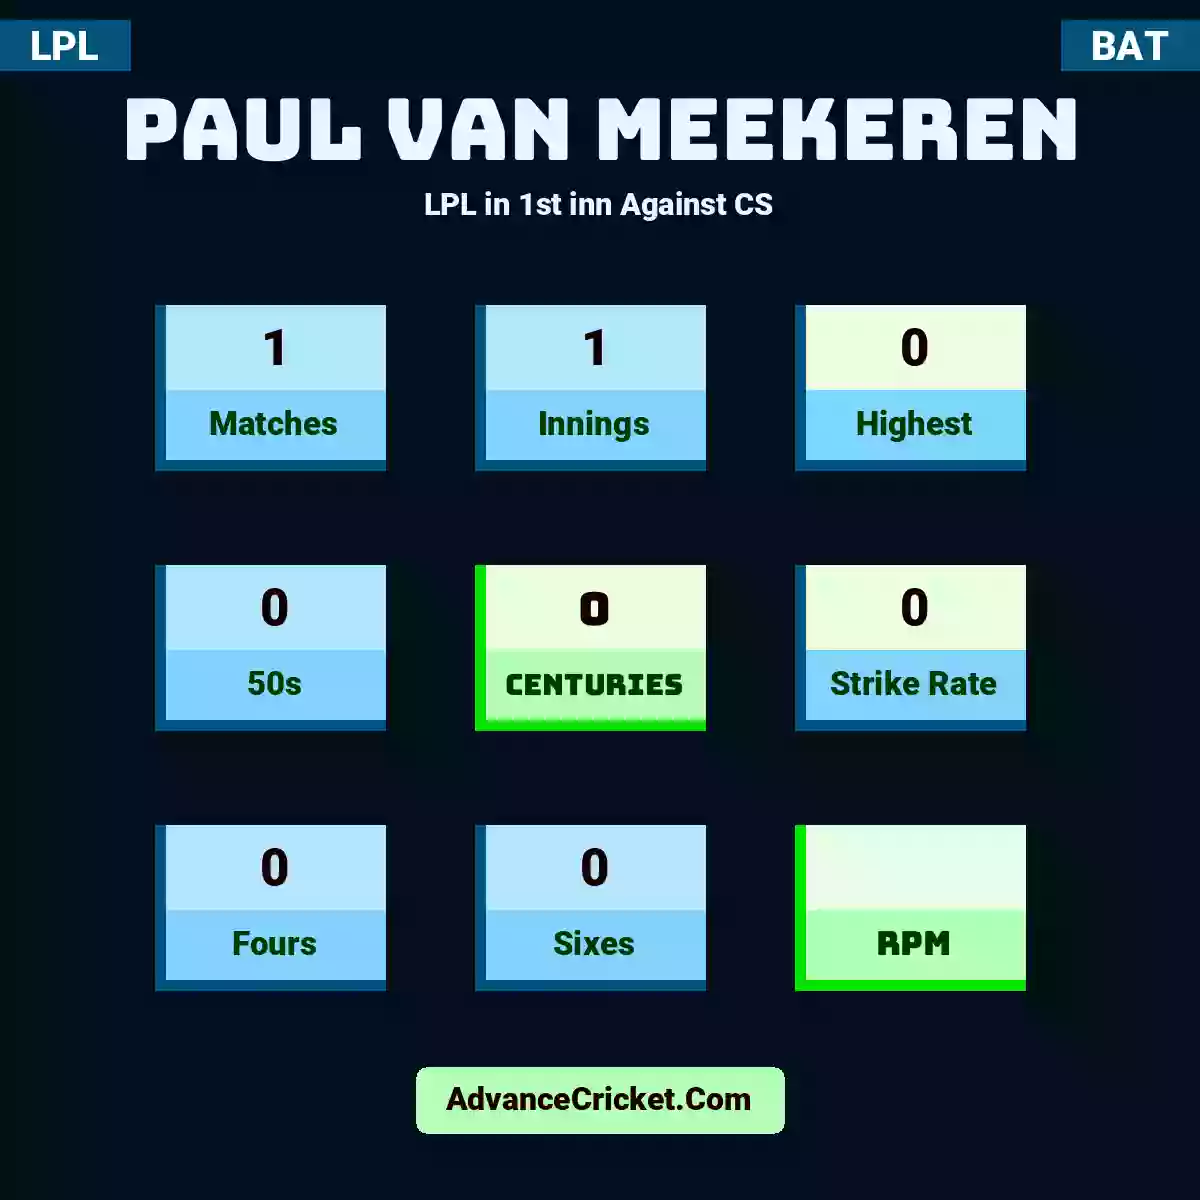 Paul van Meekeren LPL  in 1st inn Against CS, Paul van Meekeren played 1 matches, scored 0 runs as highest, 0 half-centuries, and 0 centuries, with a strike rate of 0. P.Meekeren hit 0 fours and 0 sixes.